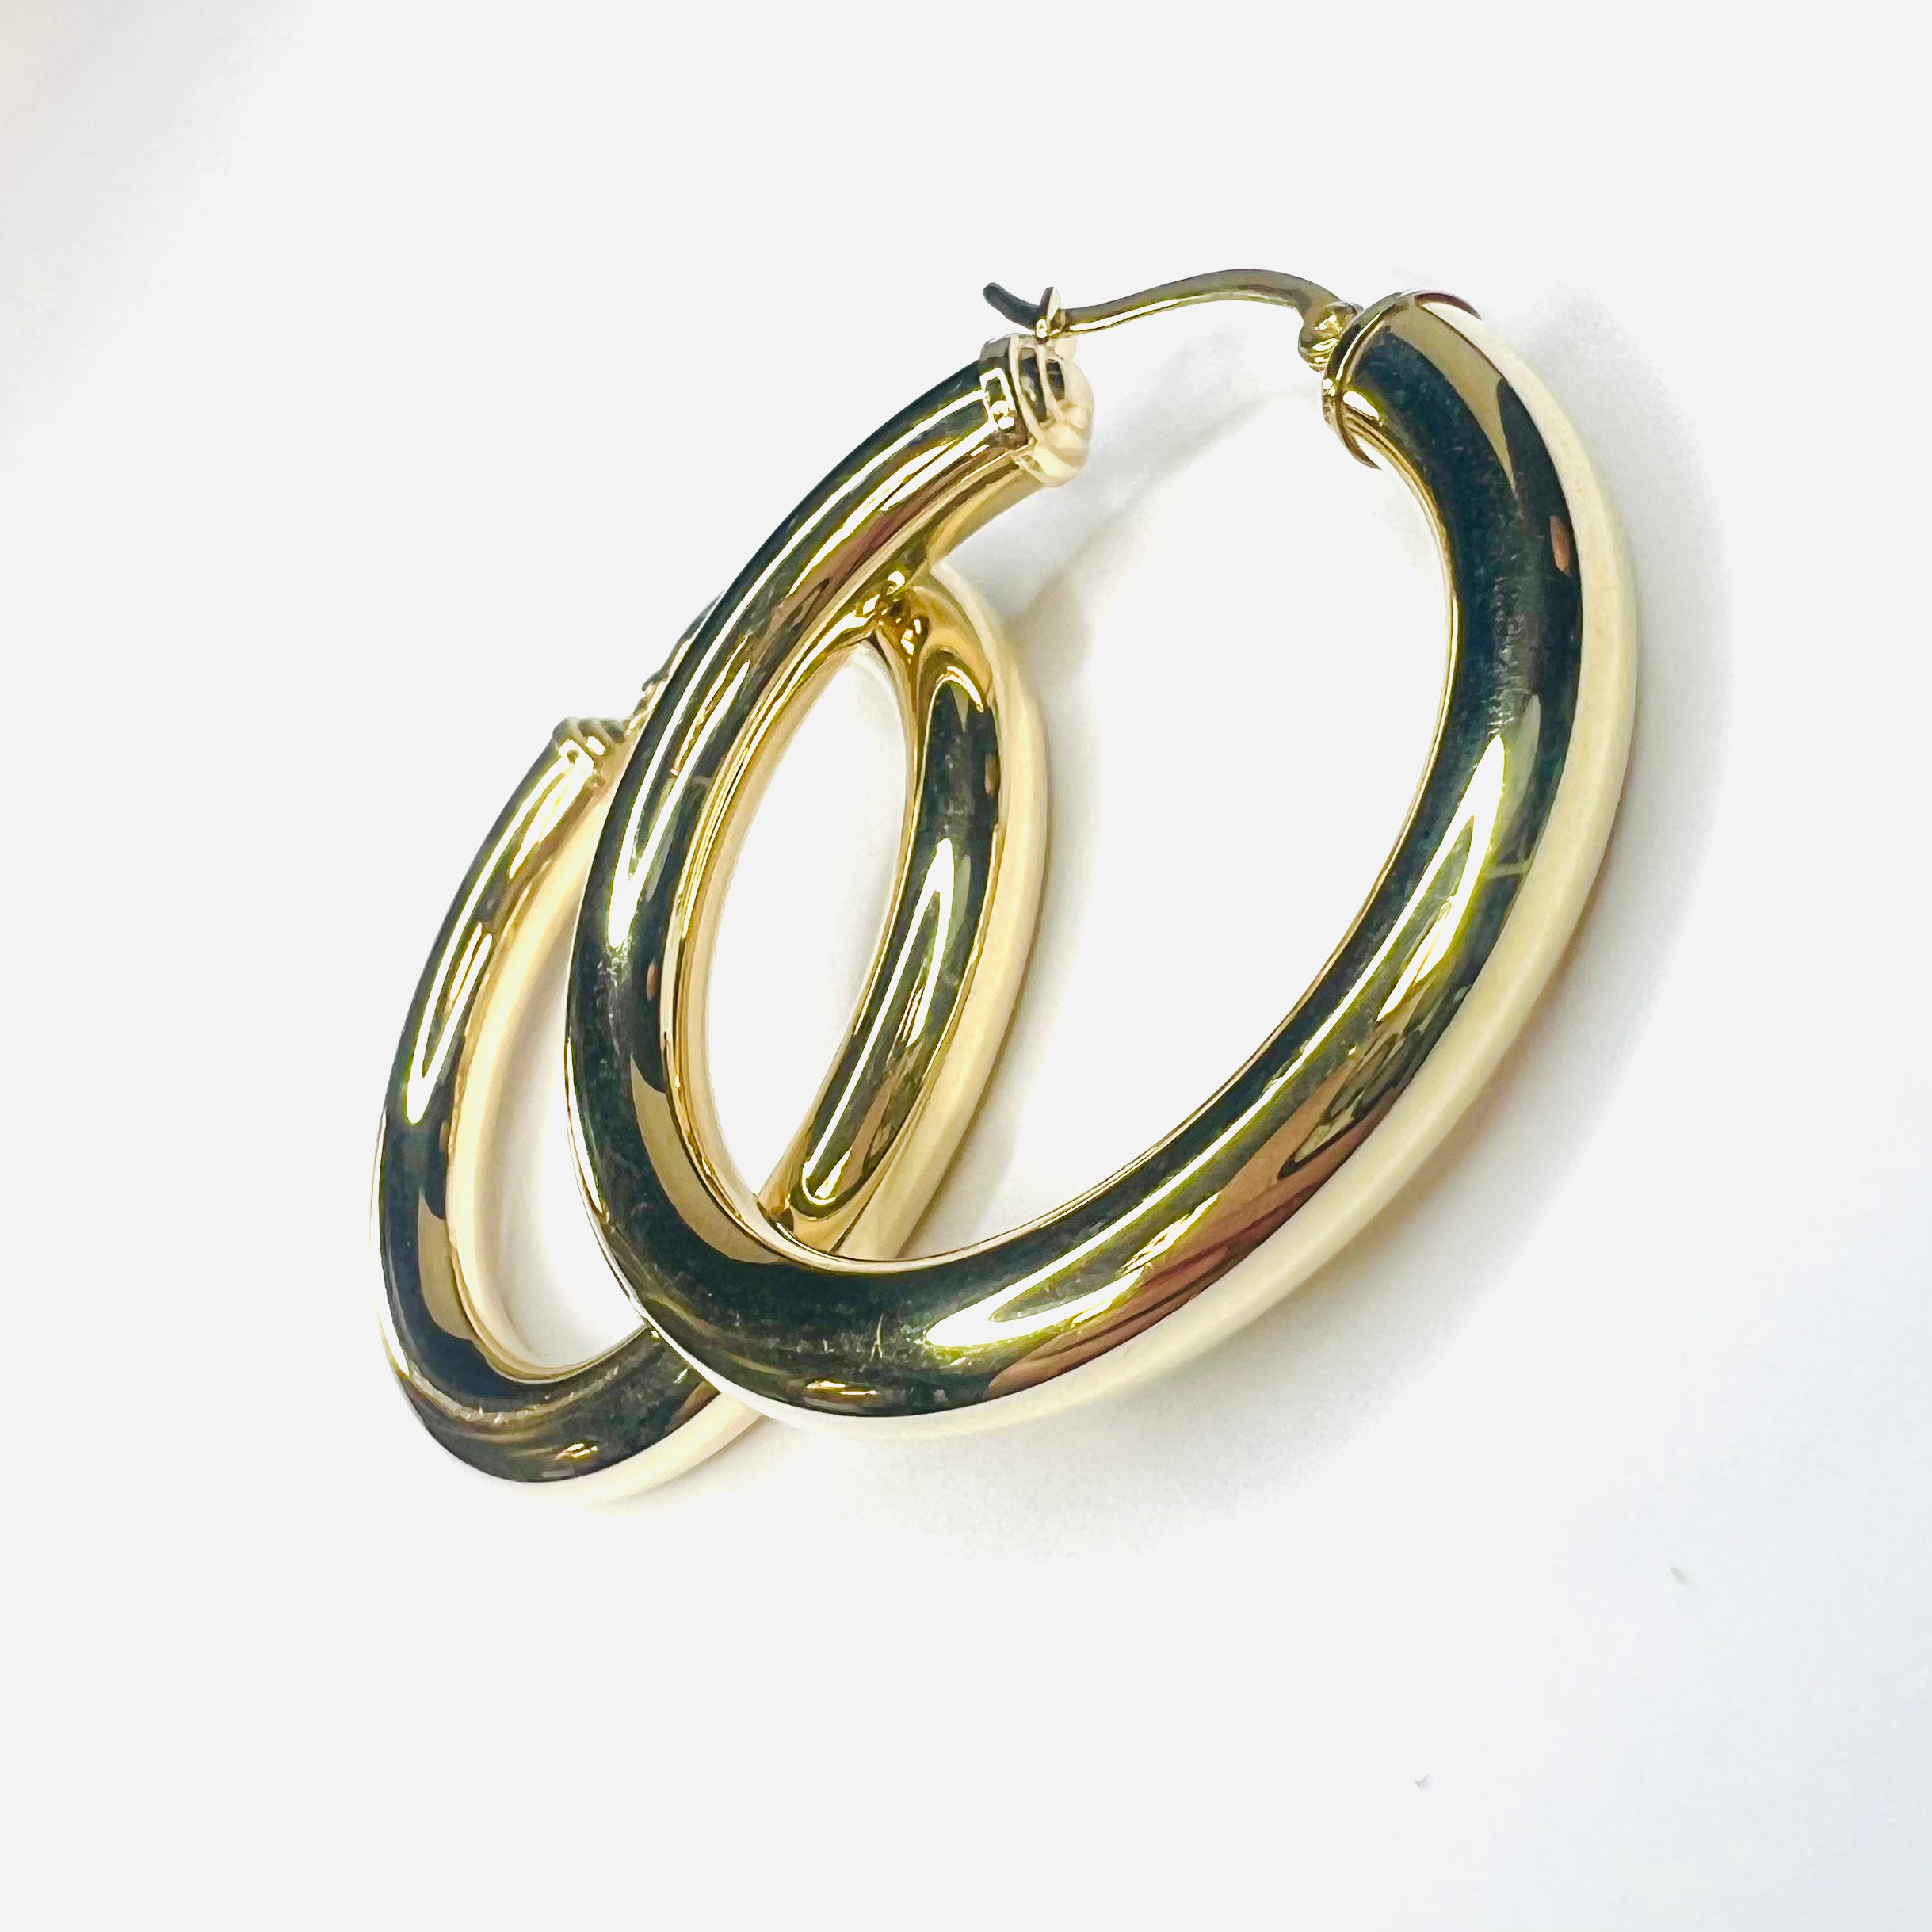 New 10K Solid Yellow Gold Hoop Earrings 1.5"